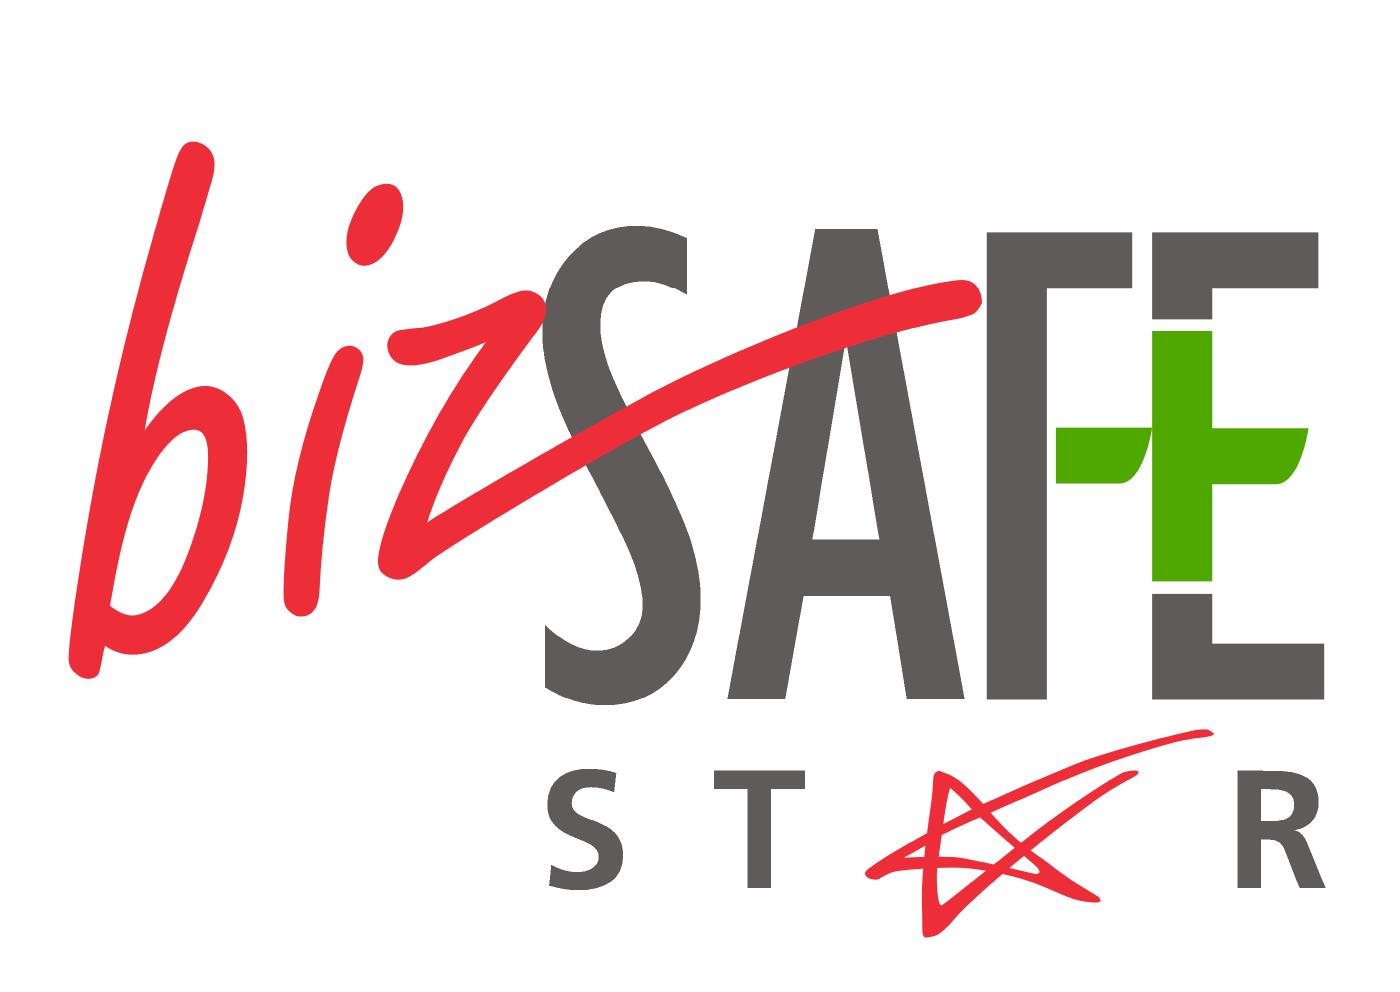 bizSAFE STAR logo - Item 1